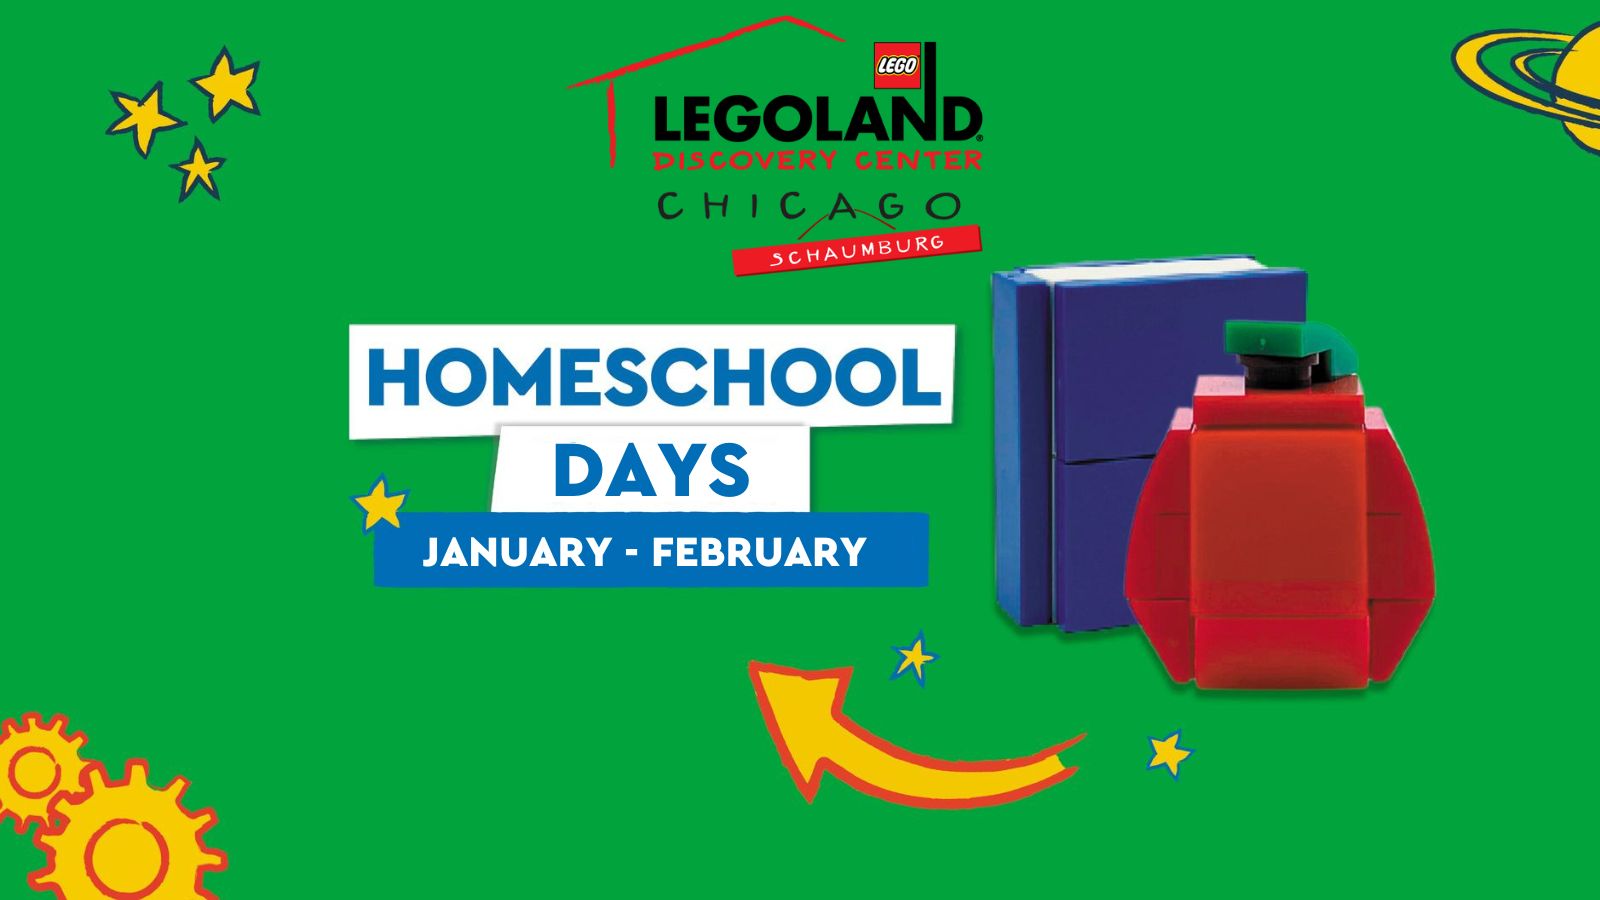 Homeschool Days at LEGOLAND Discovery Center Chicago, Schaumburg, Illinois, United States